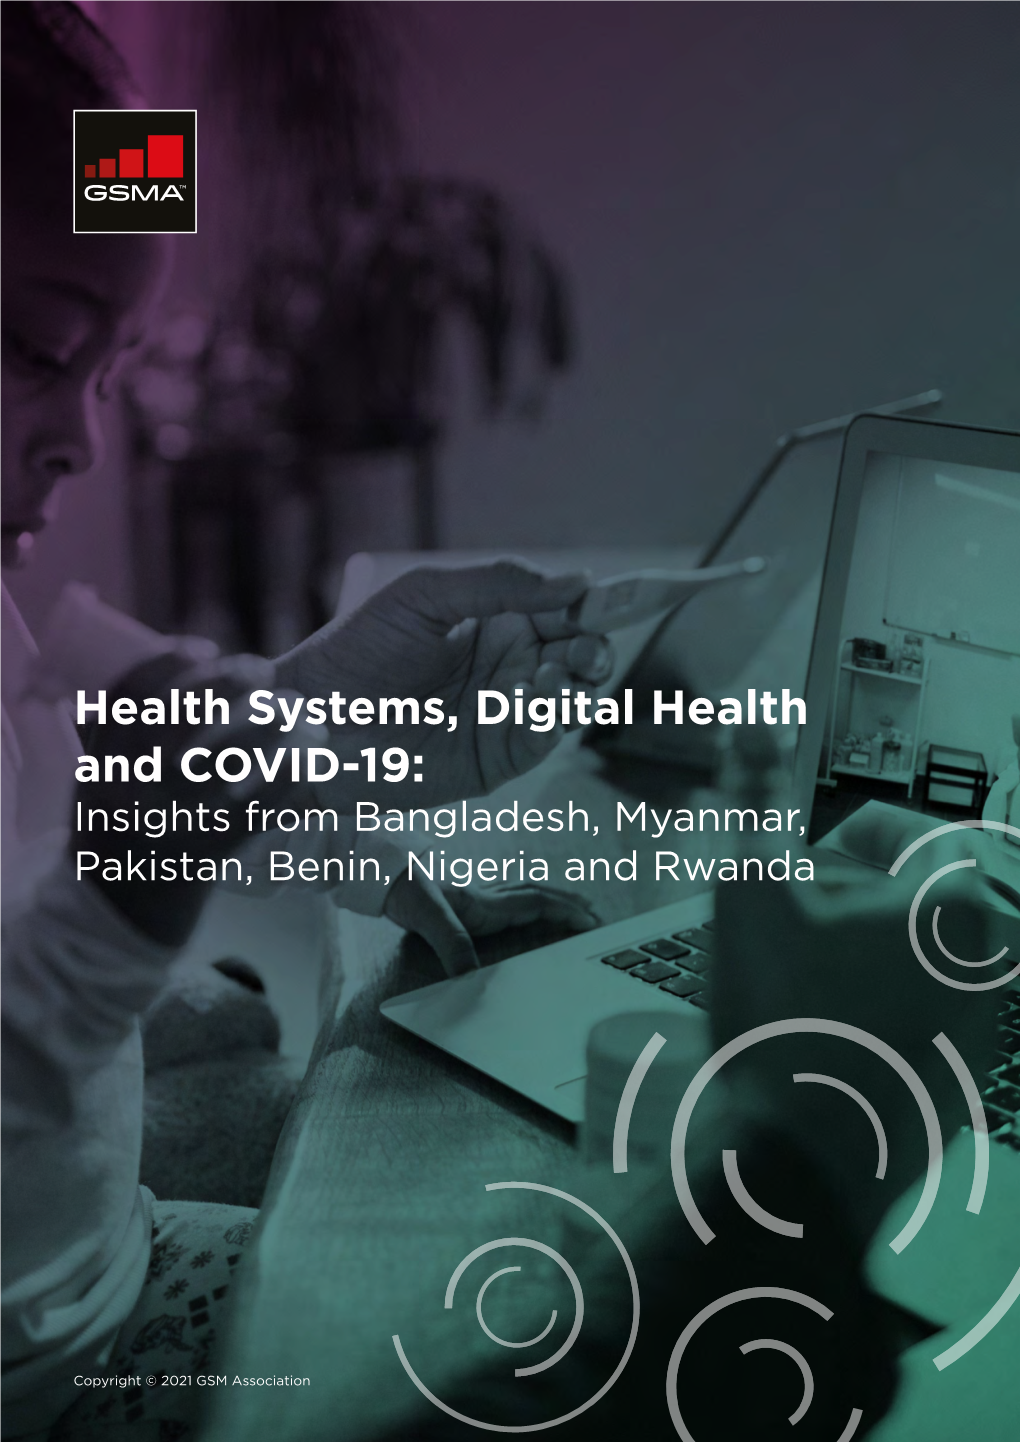 Health Systems, Digital Health and COVID-19: Insights from Bangladesh, Myanmar, Pakistan, Benin, Nigeria and Rwanda